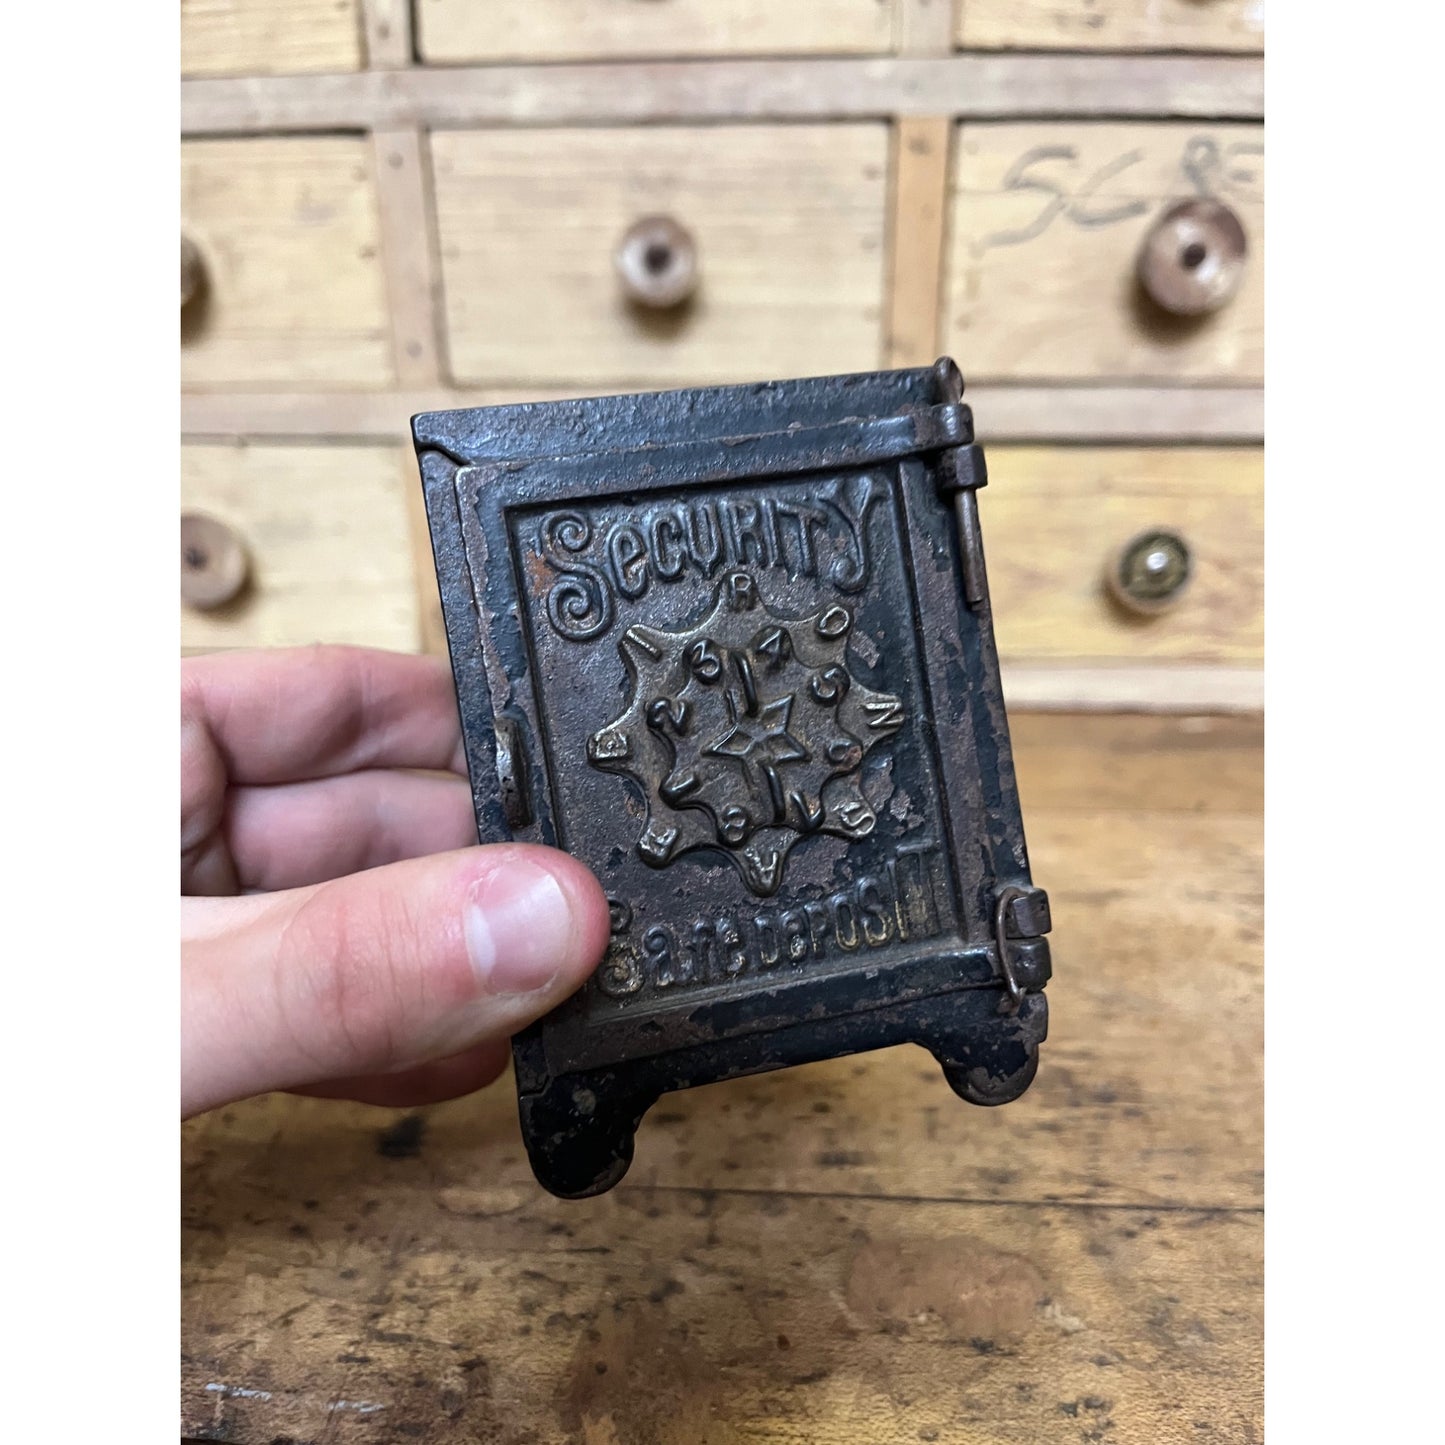 Antique Security Safe Deposit Cast Iron Combination Still Bank - Ornate